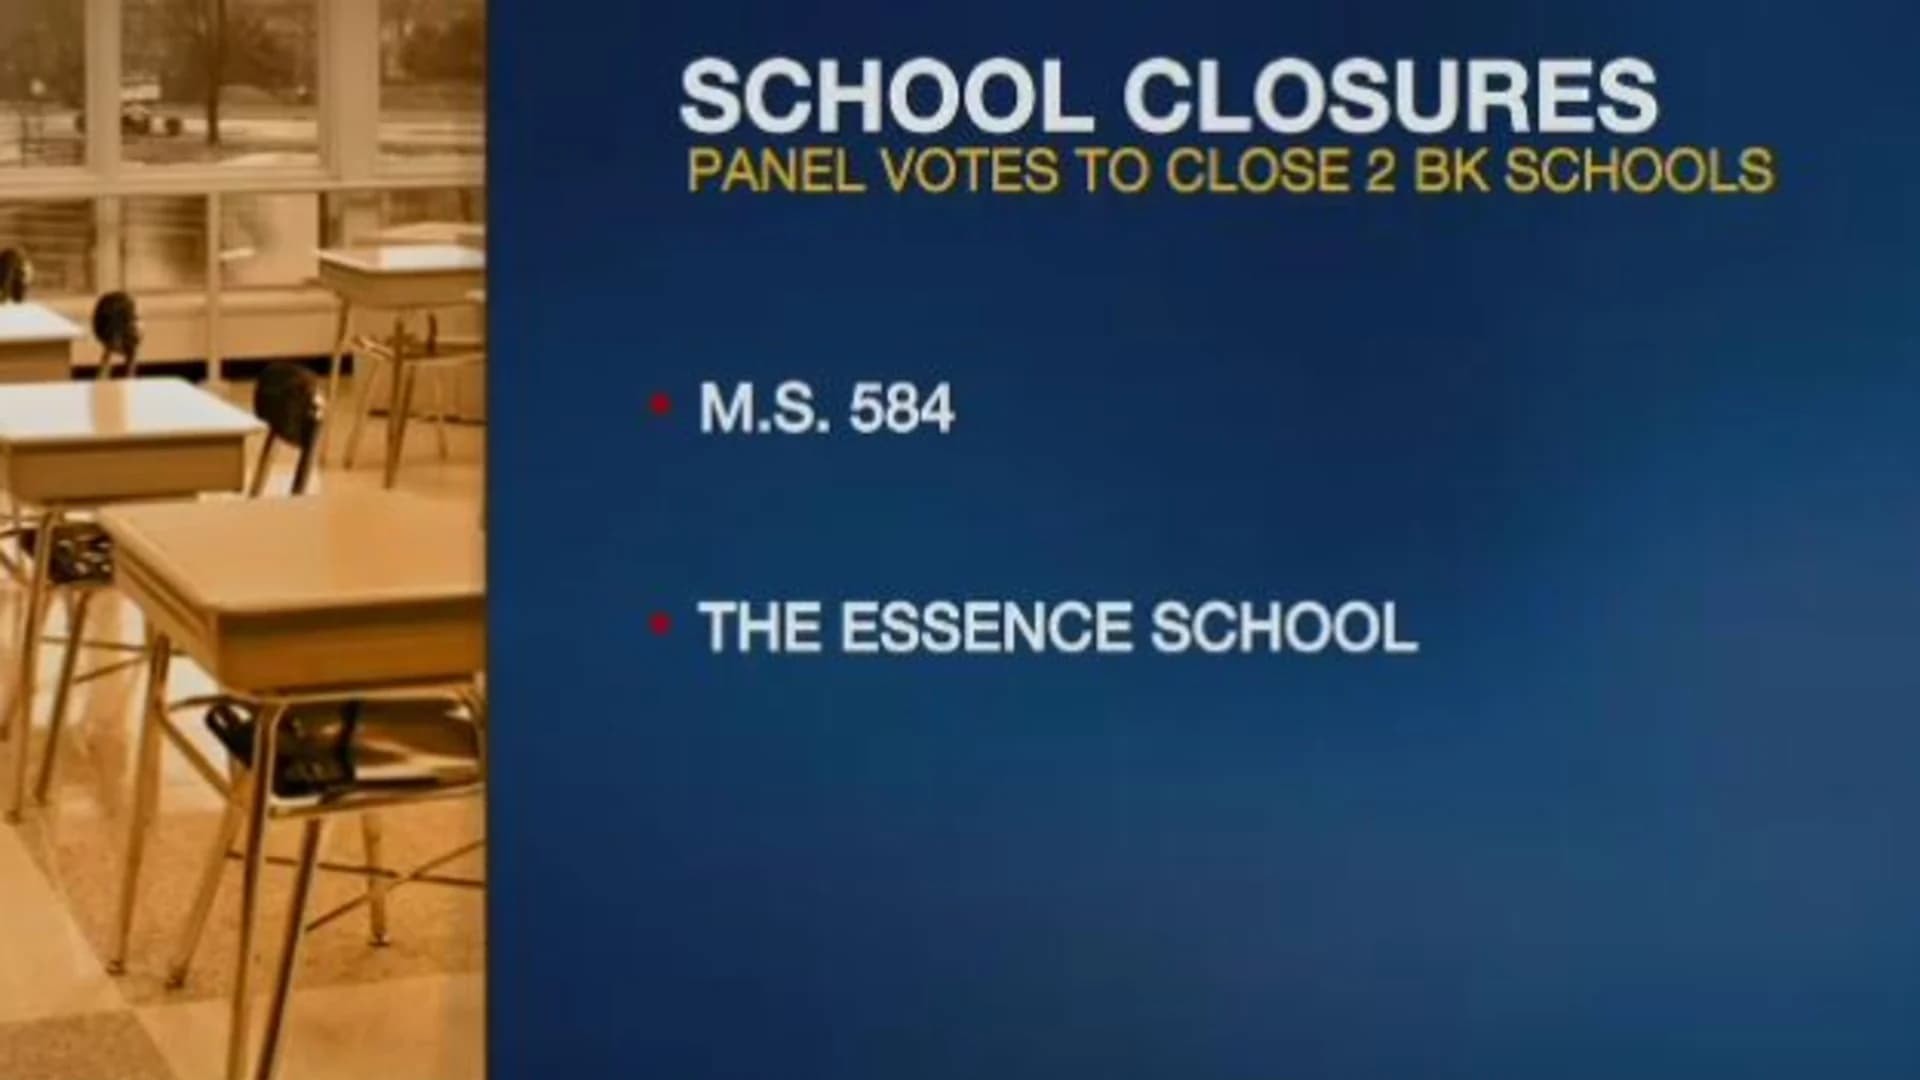 2 Brooklyn schools scheduled to close